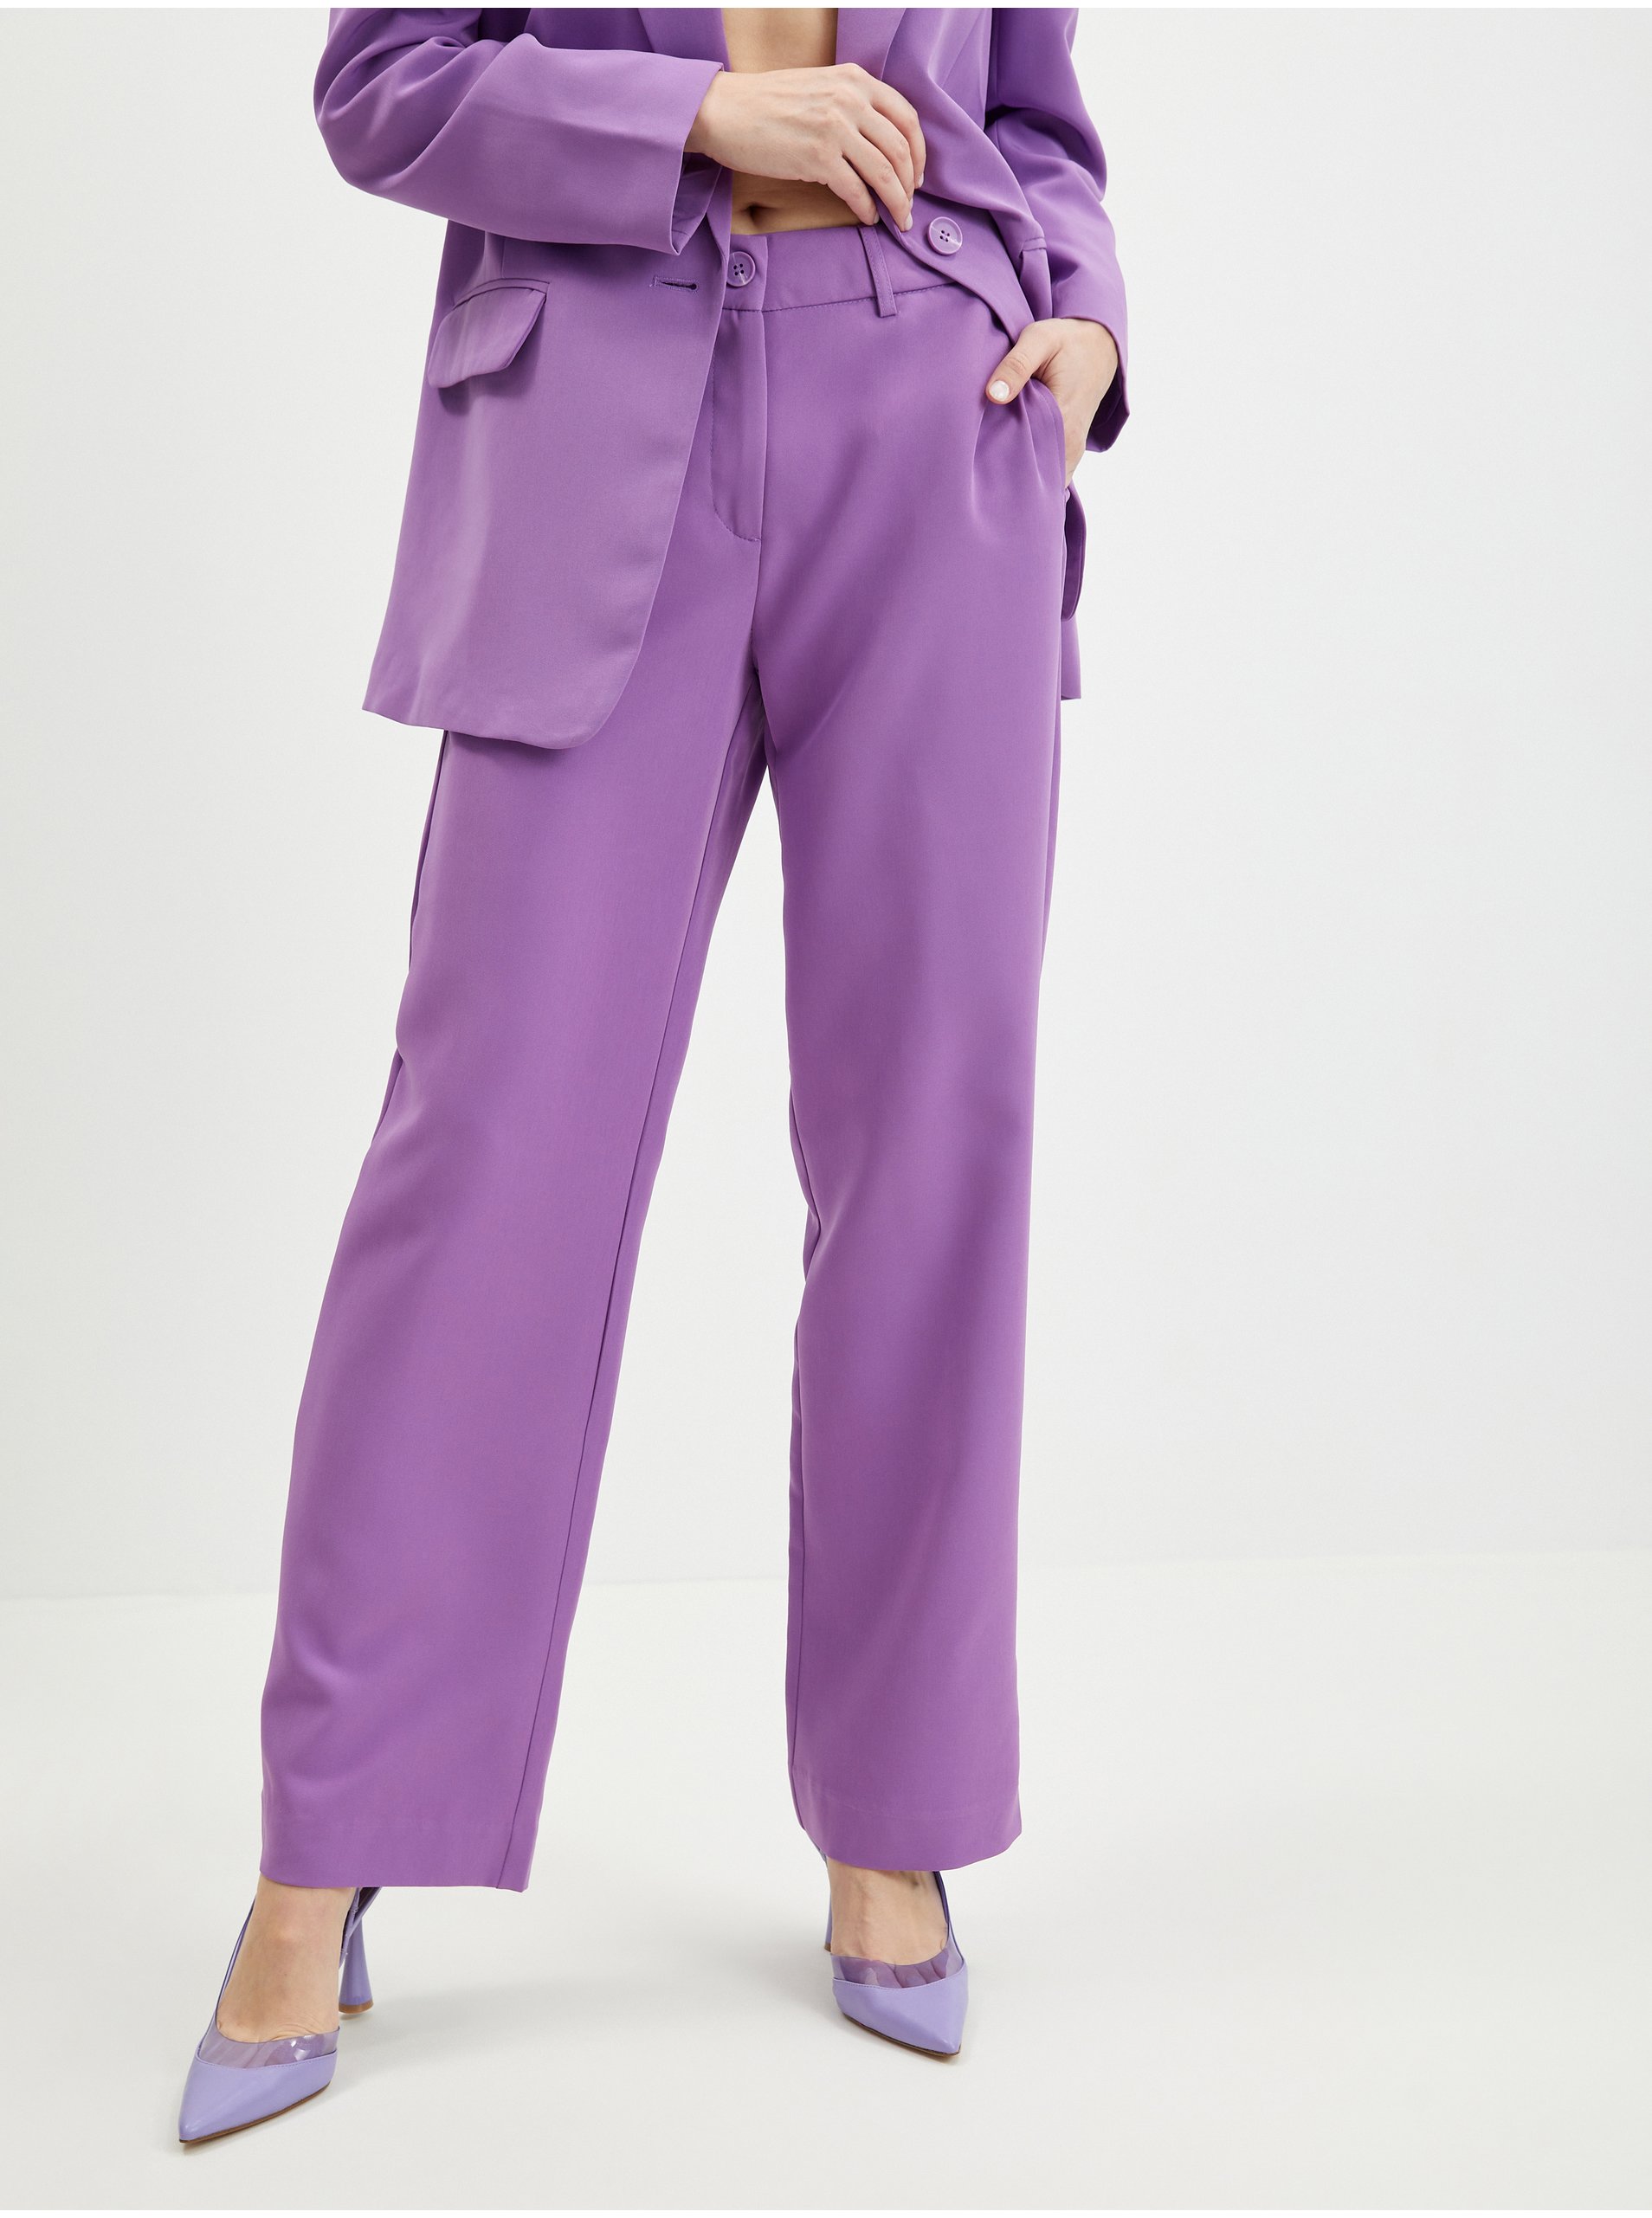 Lacno Elegantné nohavice pre ženy ONLY - fialová